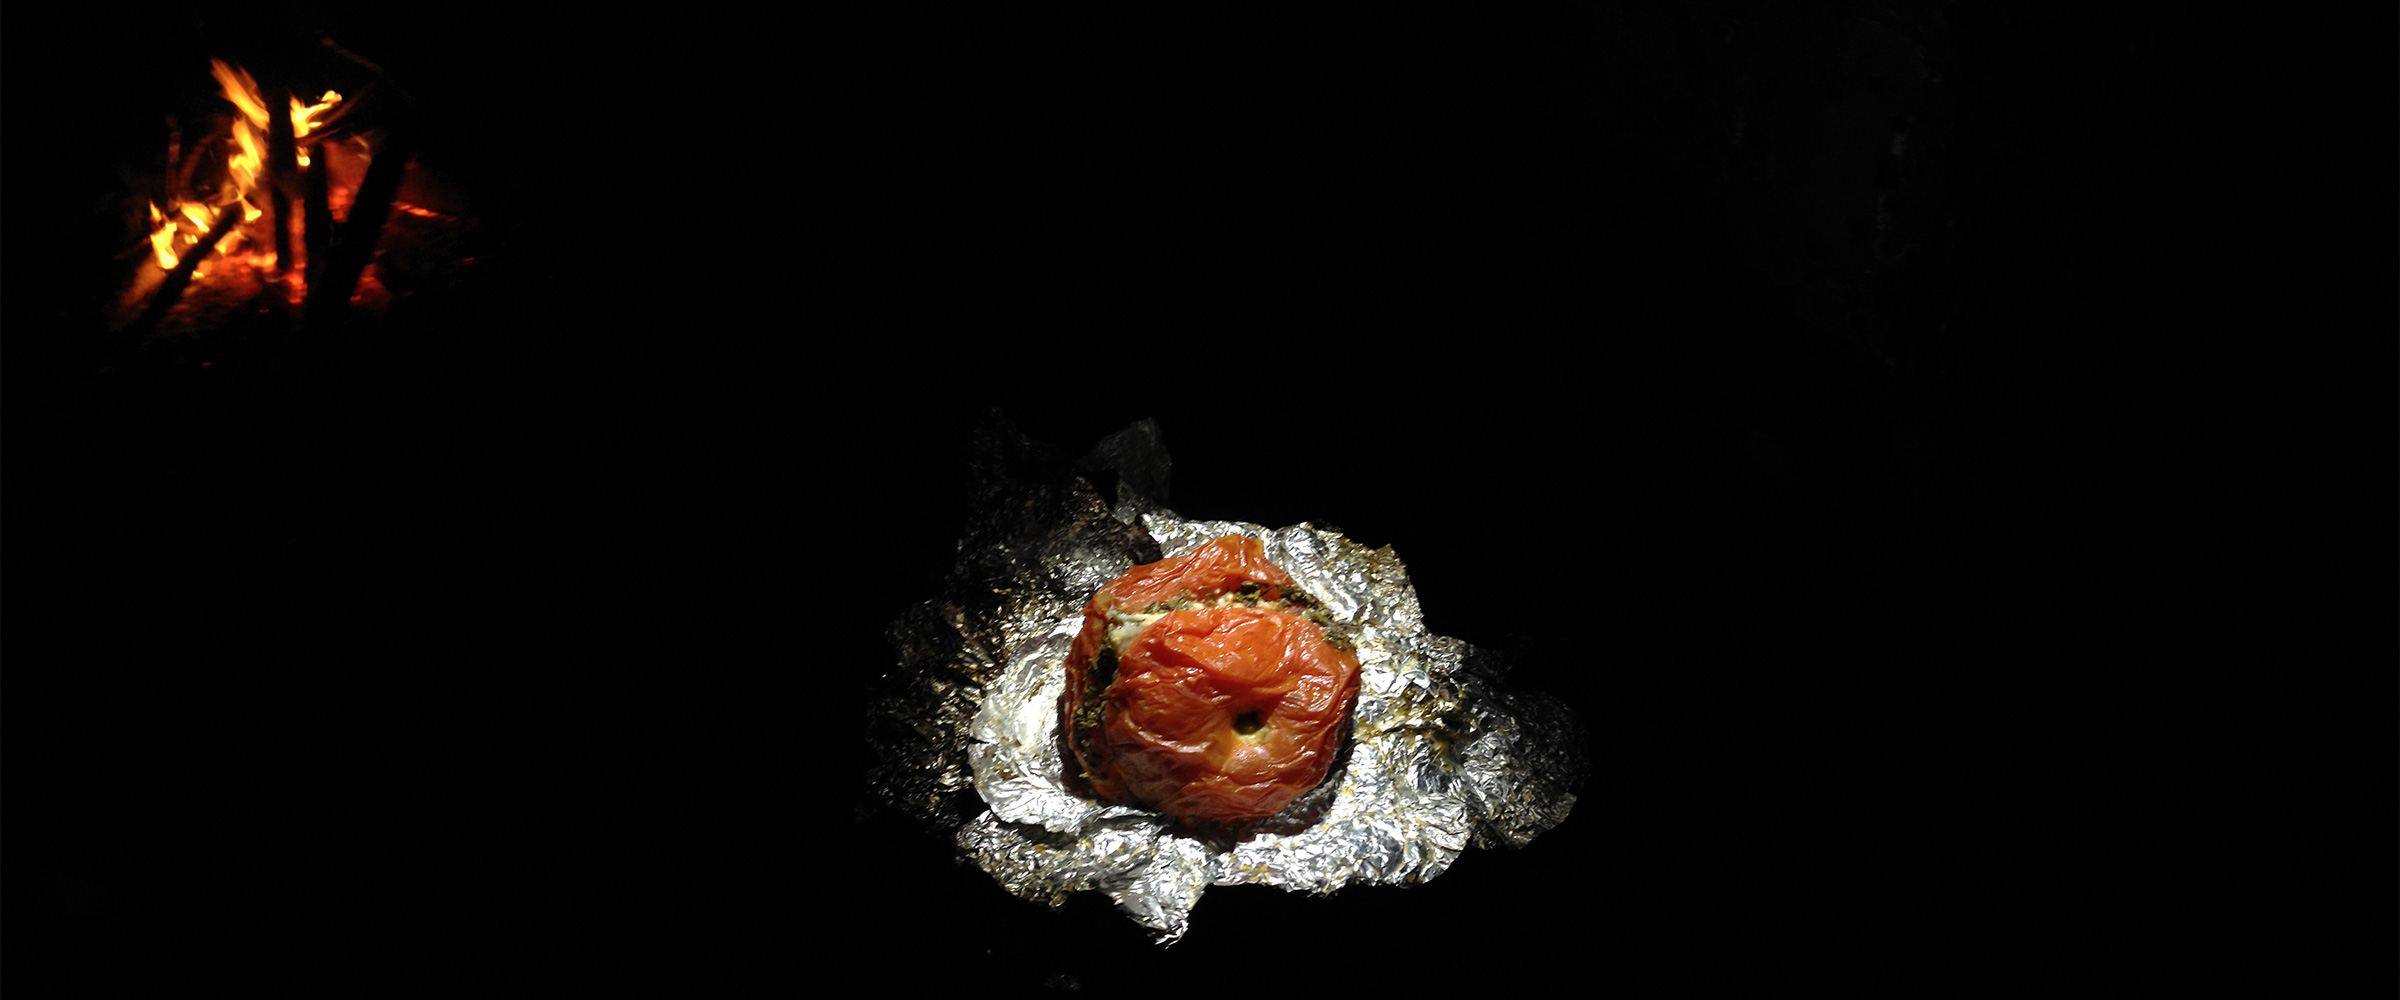 PANORAMA DIARY | Iphoneography blog | Wild stuffed roasted tomato